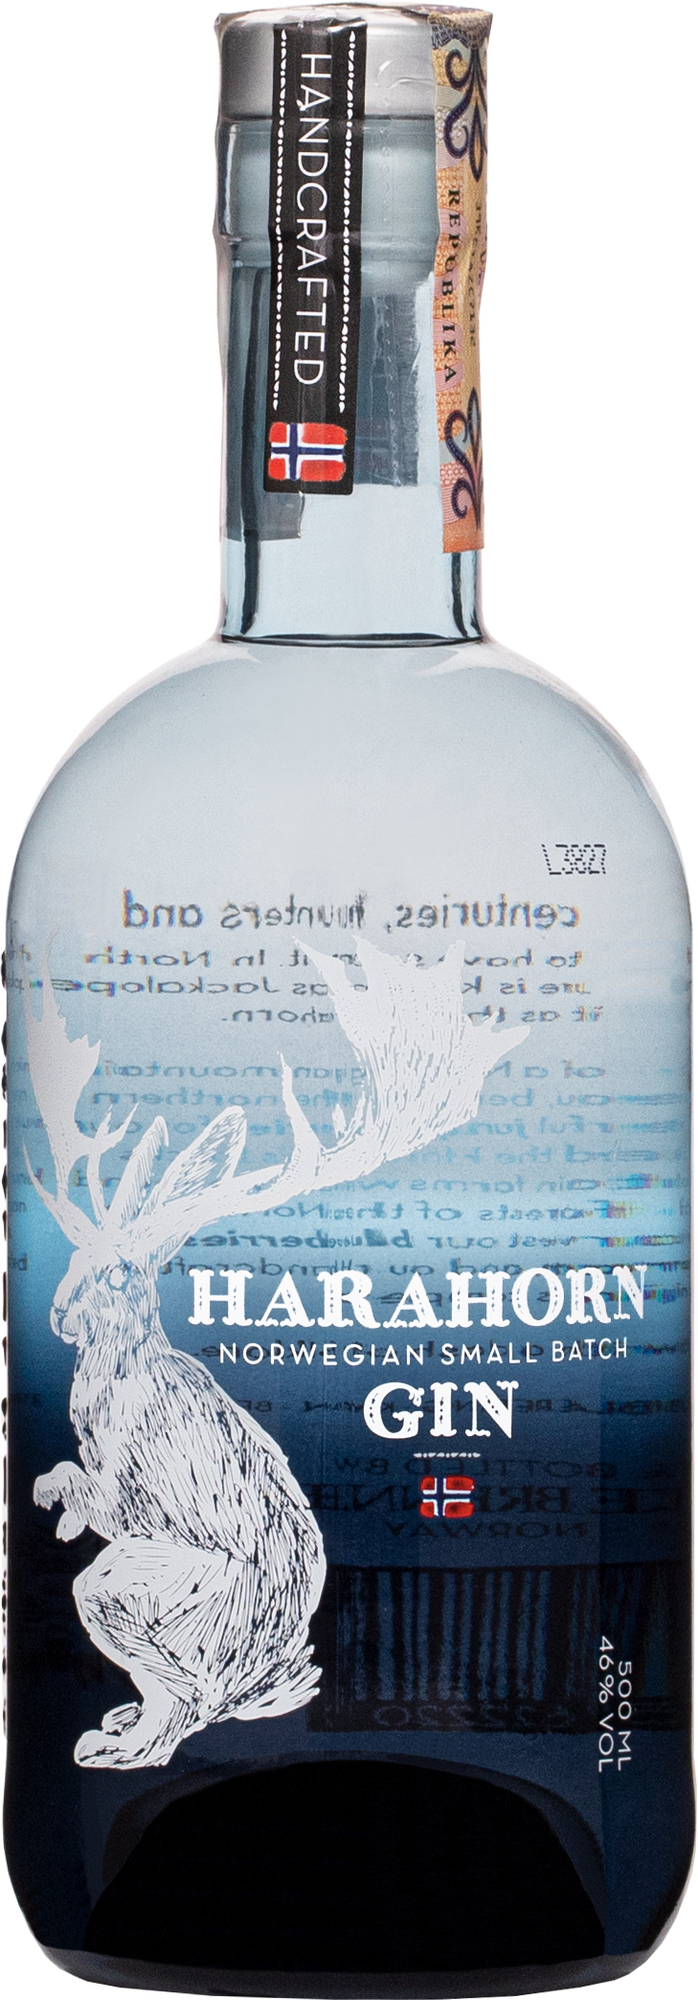 Harahorn Small Batch Gin 46% 0,5l (čistá fľaša)